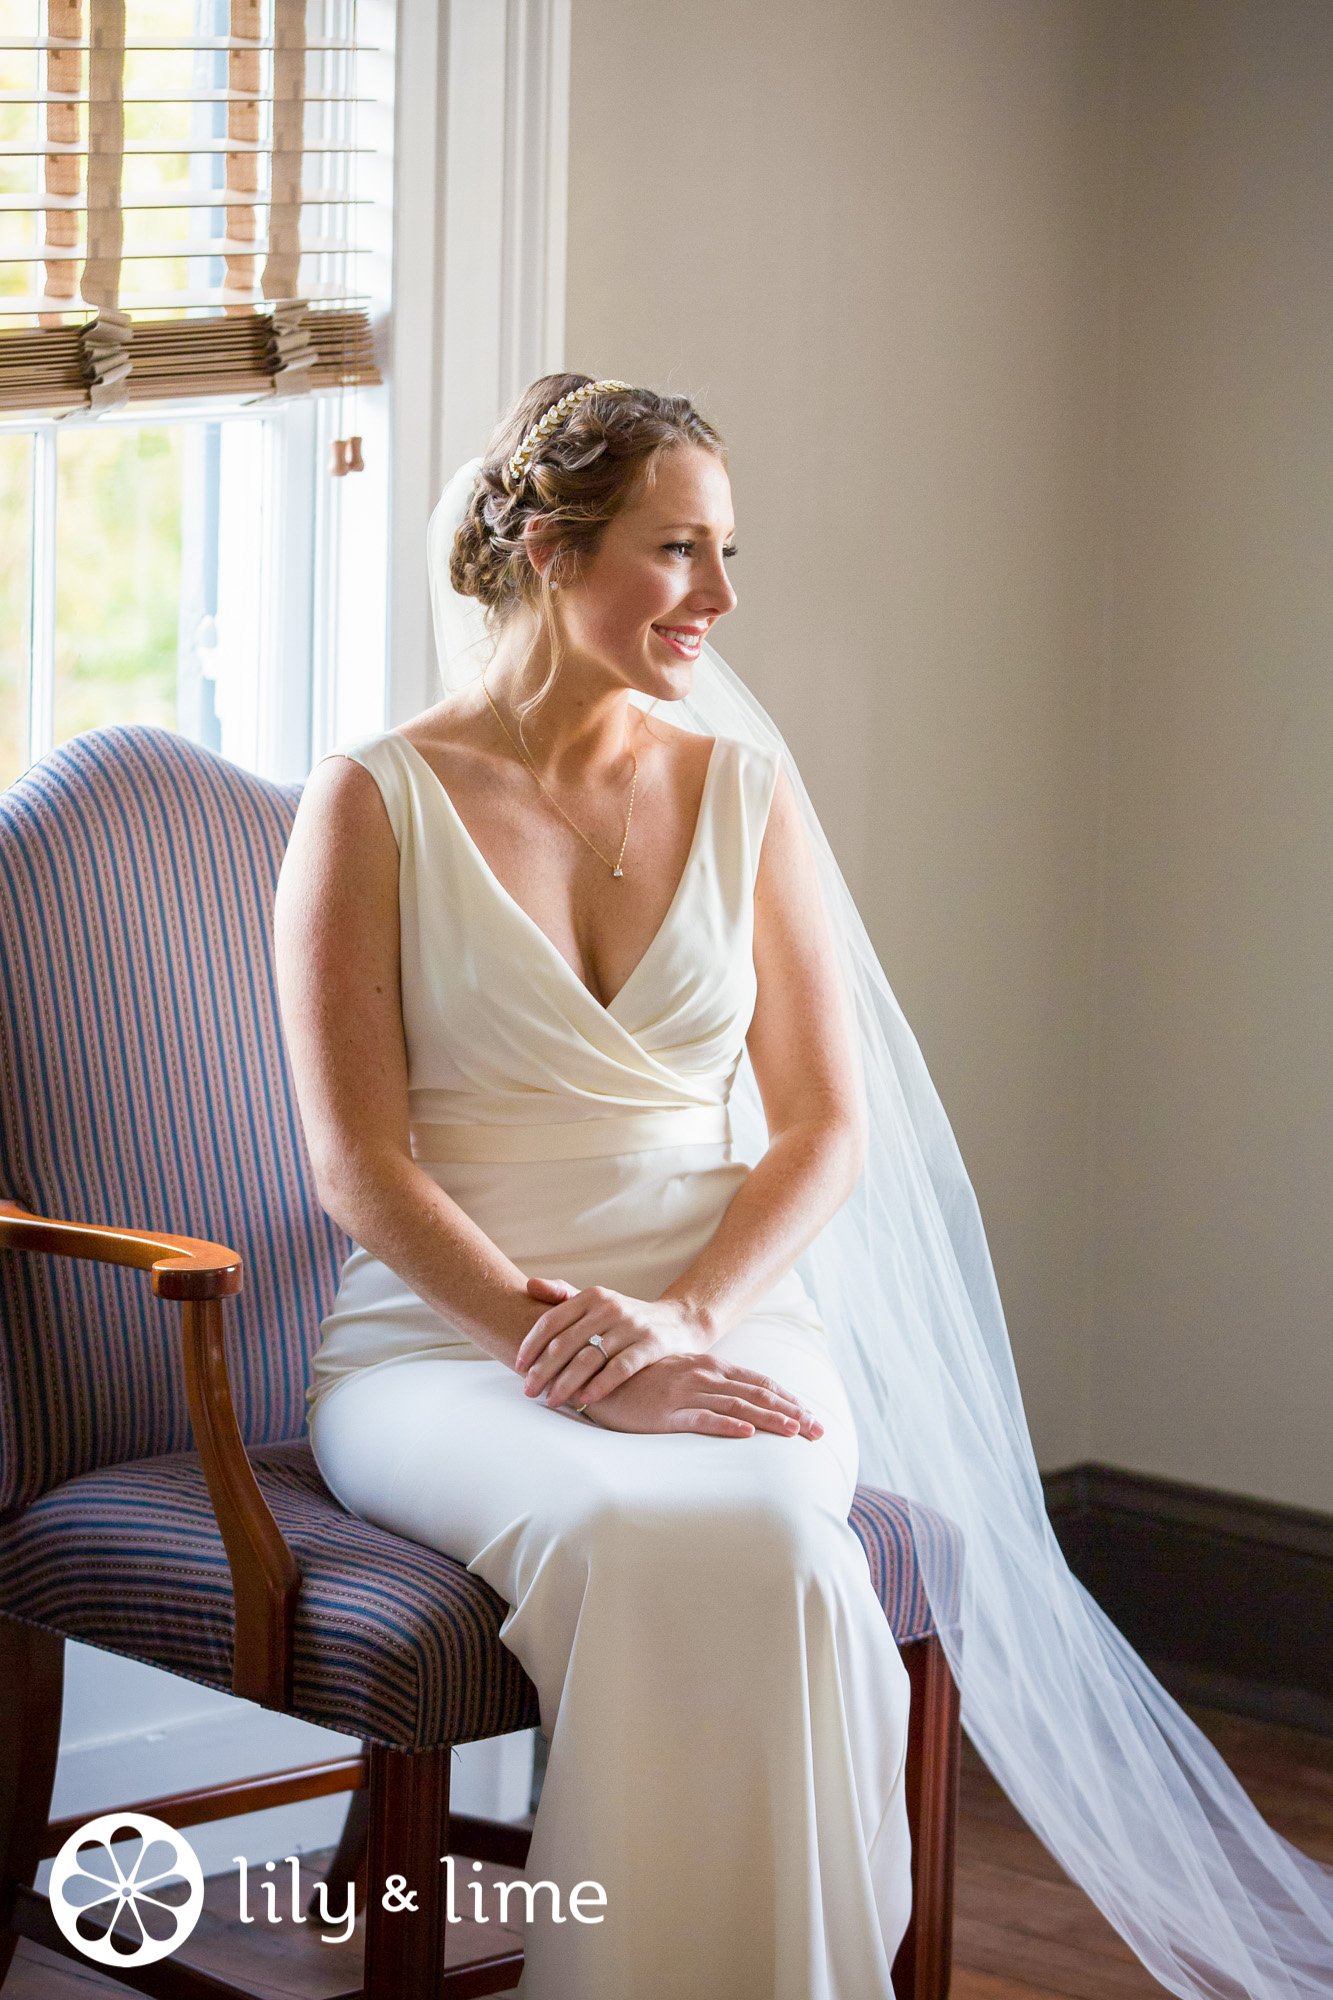 7 Stunning Bridal Veil Styles to Consider